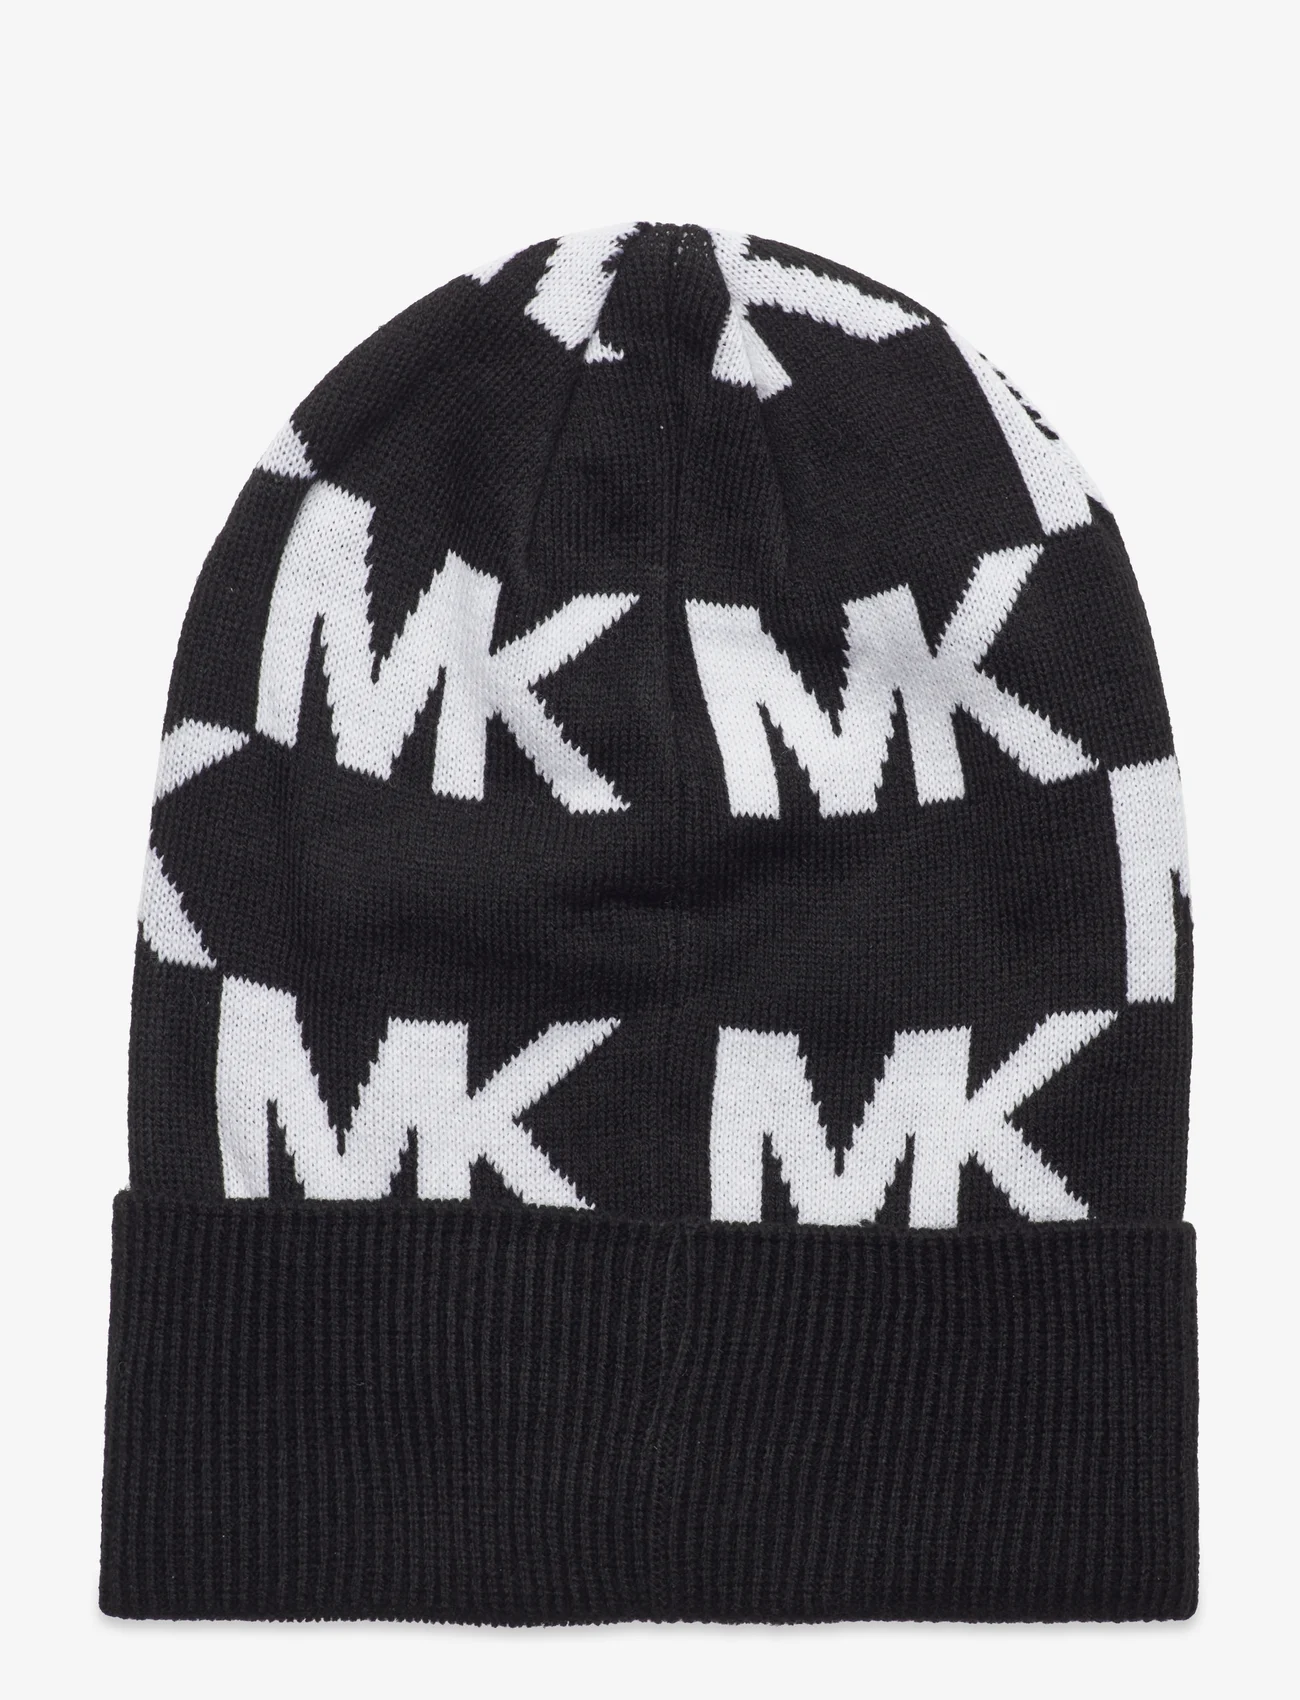 Michael Kors Accessories - Oversized chess mk cuff hat - pipot - black, cream - 1